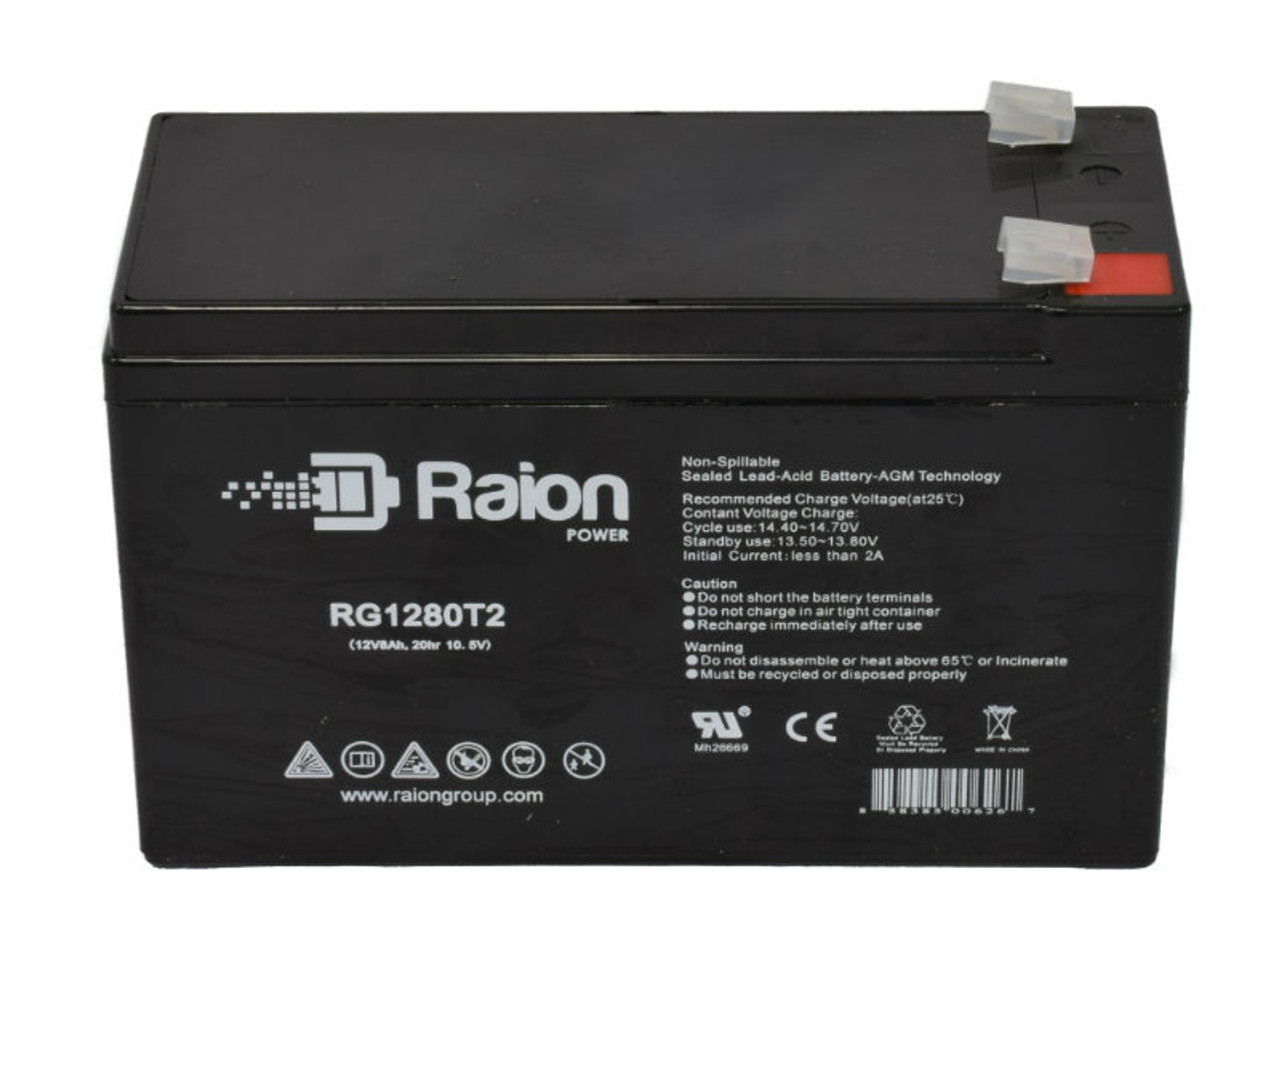 Raion Power RG1280T1 Replacement SLA Battery for Wangpin 6FM8